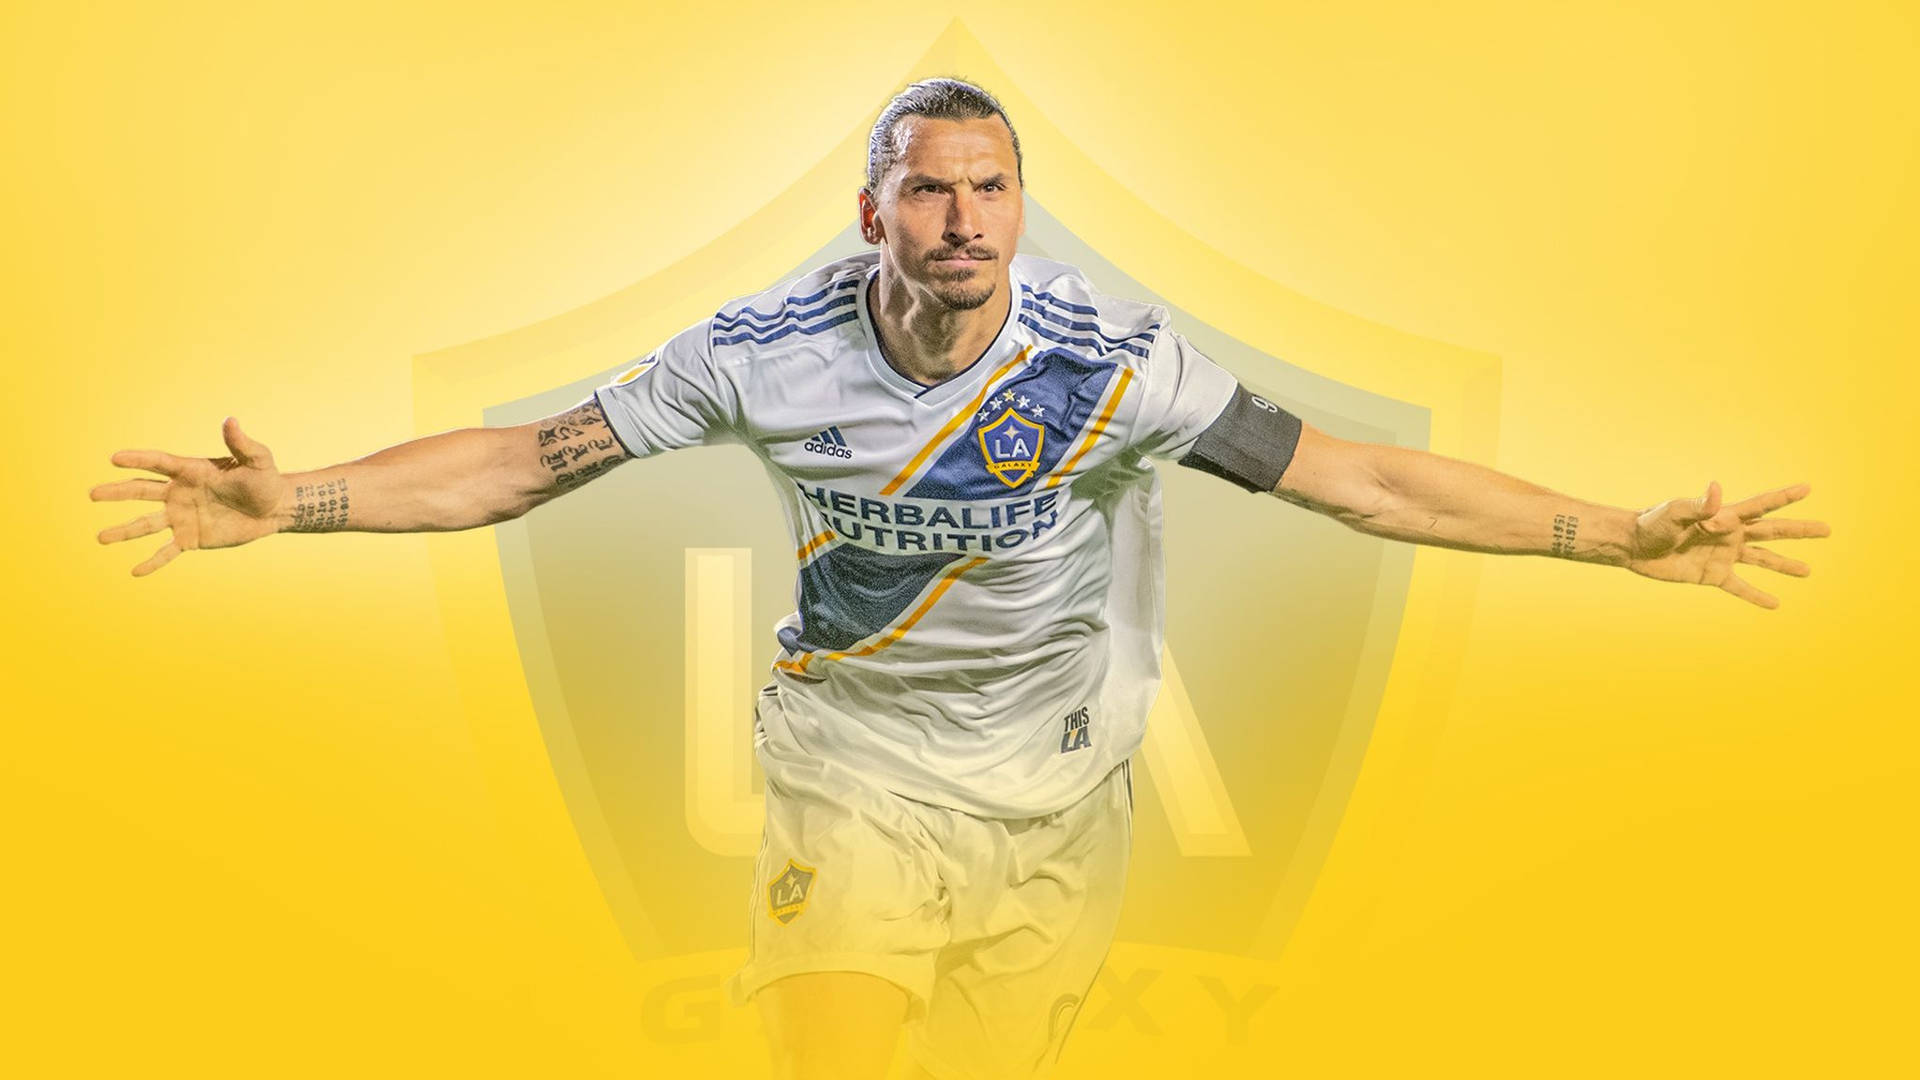 LA Galaxy Soccer Player Digital Photoshop Wallpaper